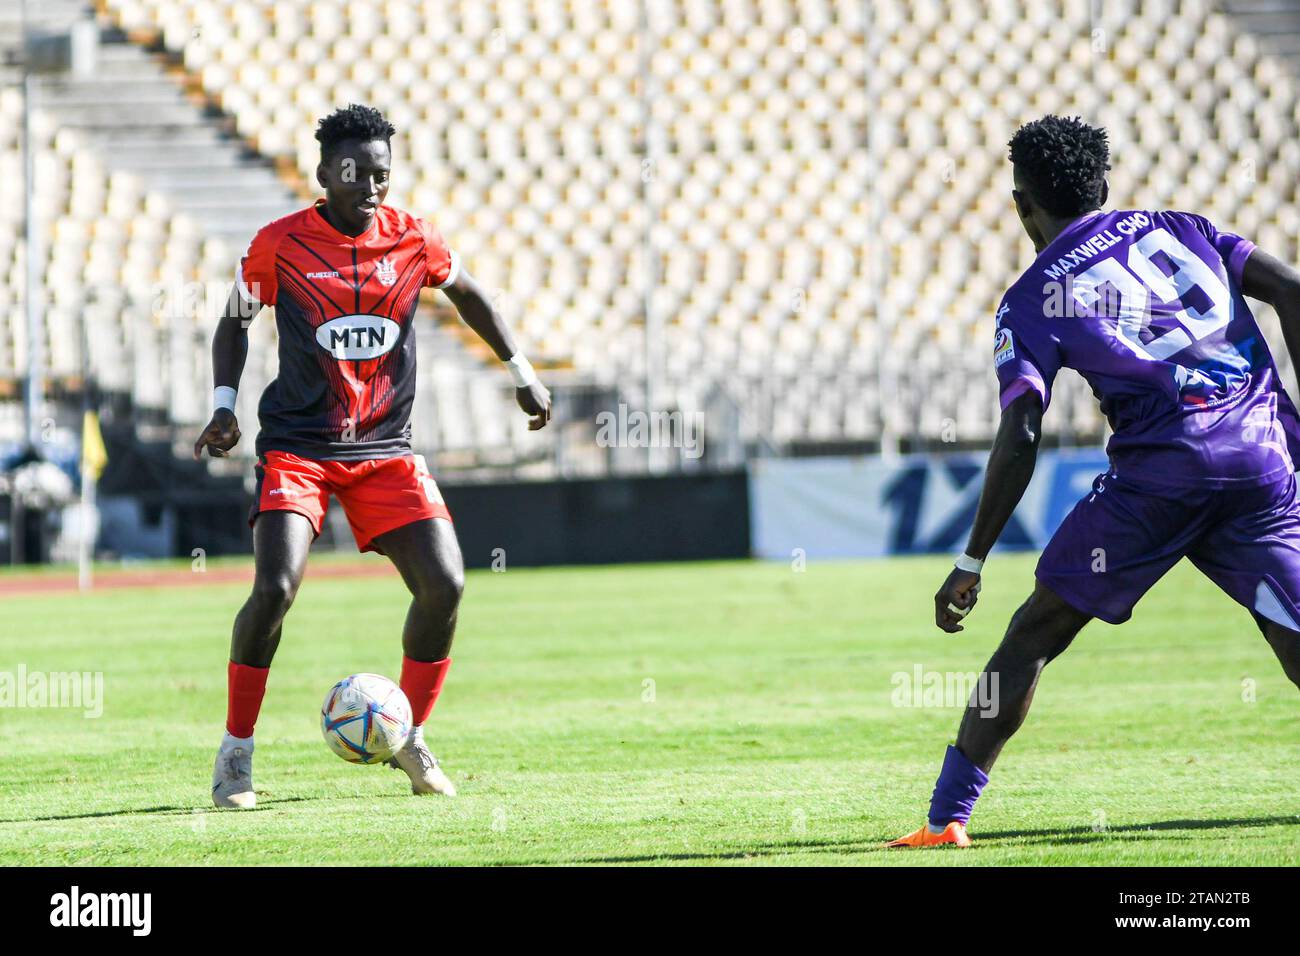 YAOUNDÉ, CAMEROUN - NOVEMBRE 5 : Emmanuel Pierre Maxwell de Fortuna et Maxwell Mbuyah Cho de Colombe lors du match MTN Cameroon Elite One Banque D'Images